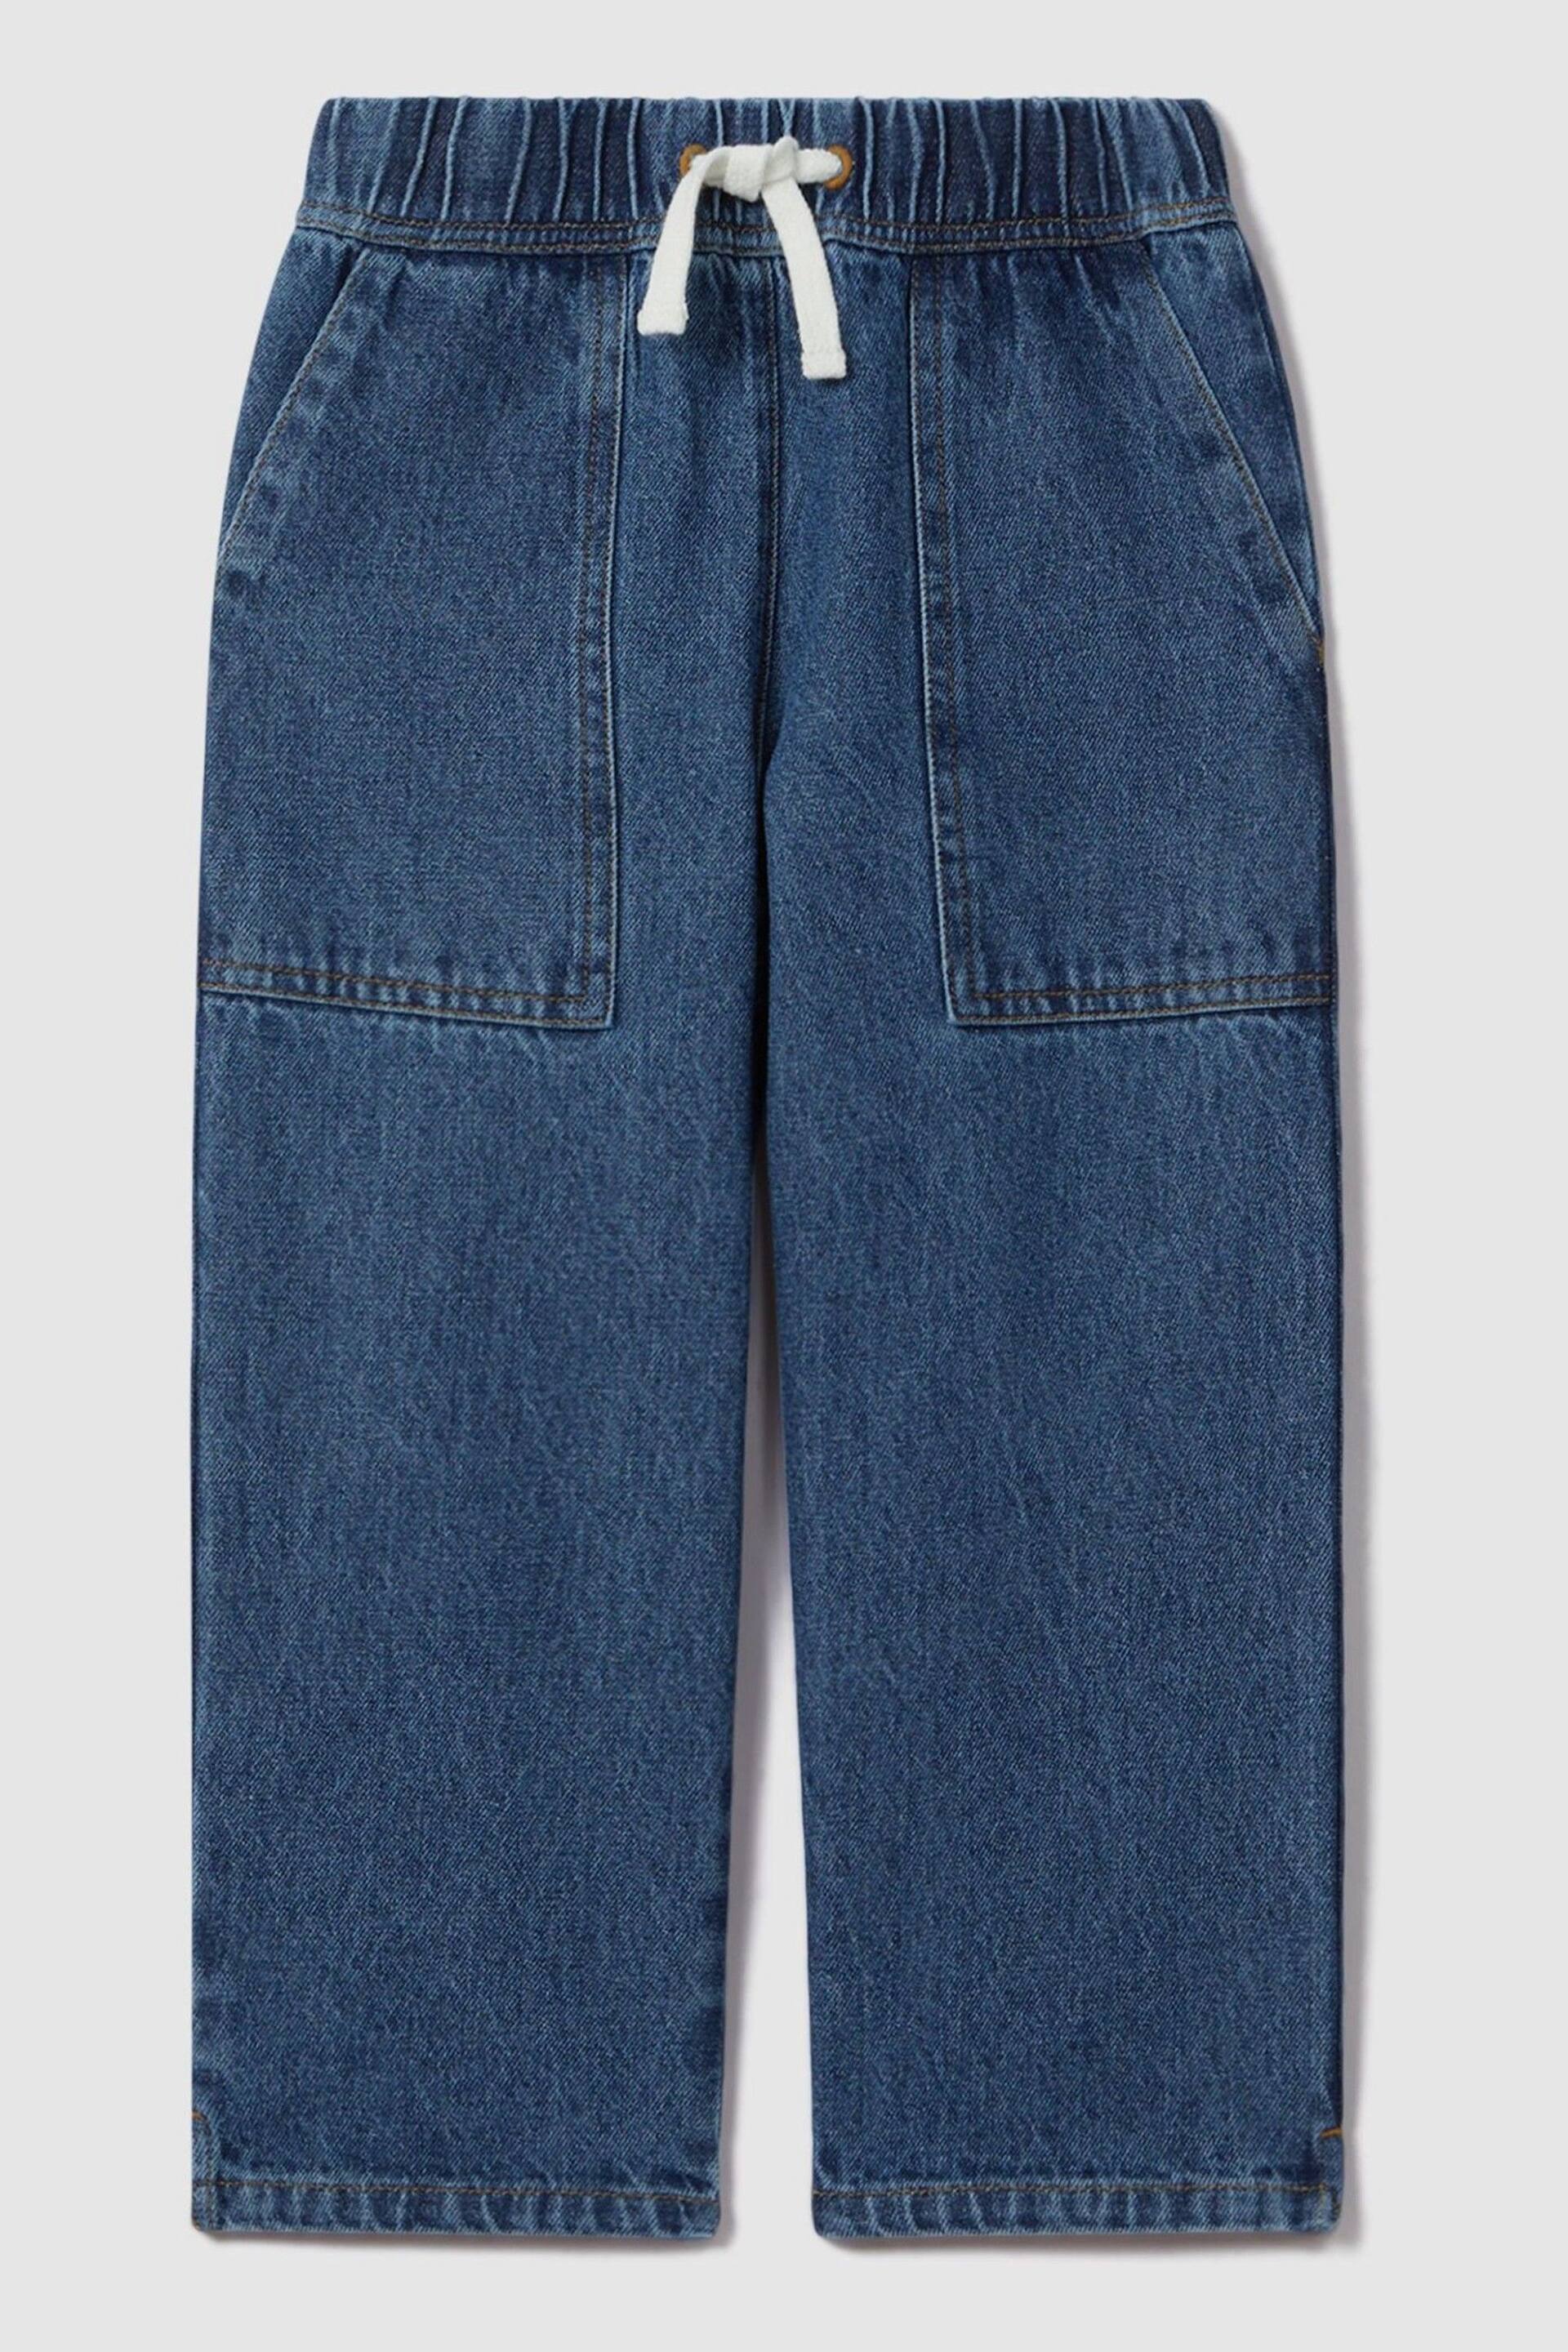 Reiss Blue Marloe Senior Drawstring Waist Straight Leg Jeans - Image 2 of 4